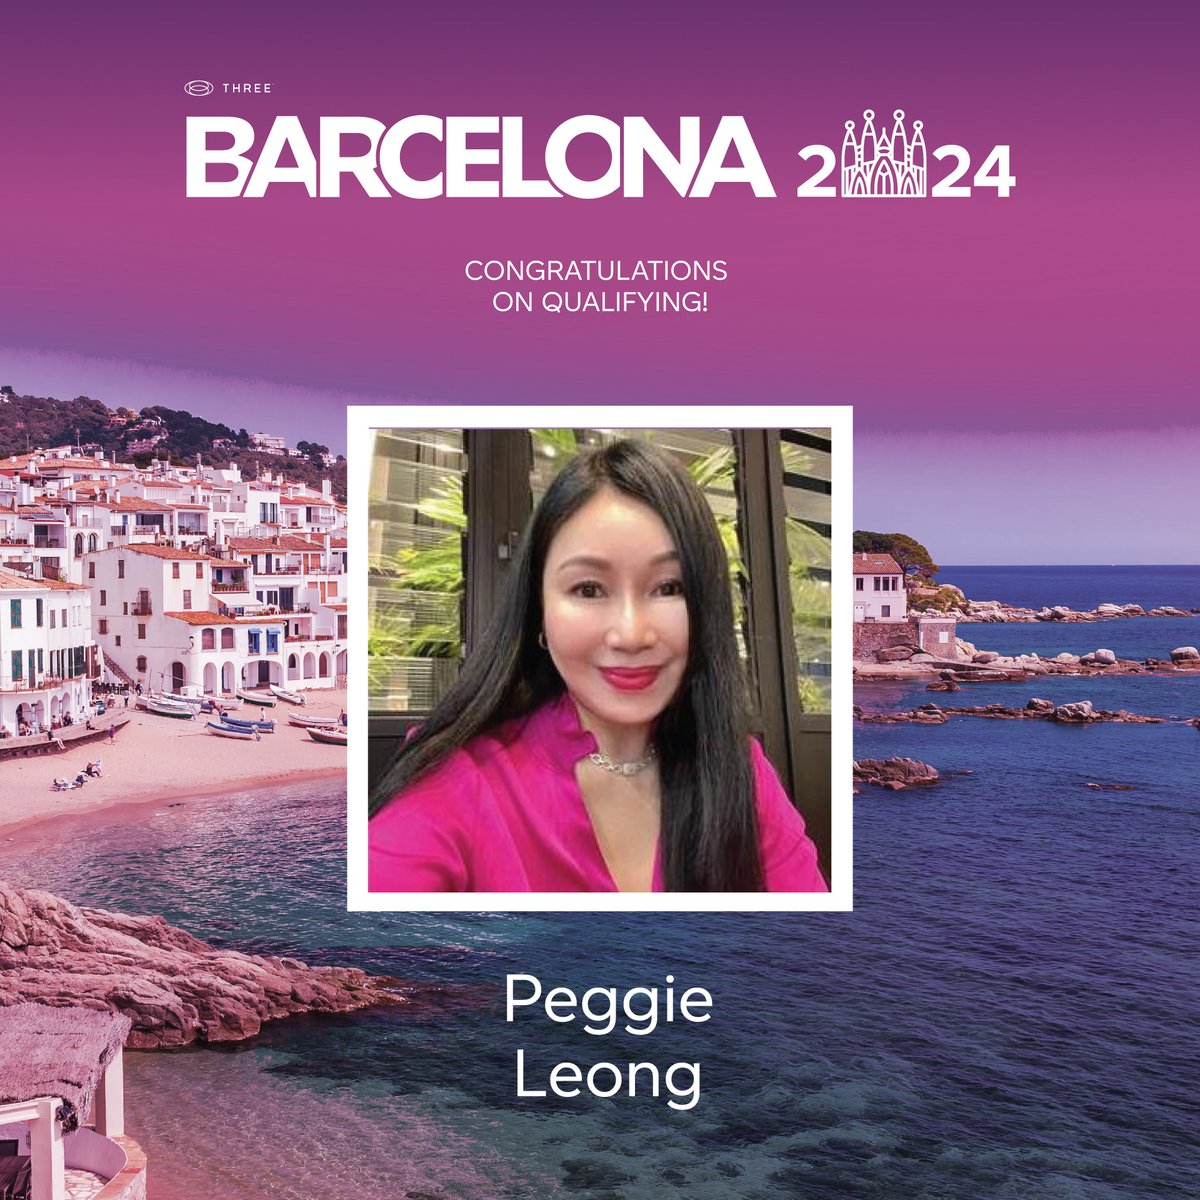 Peggie-Leong-2